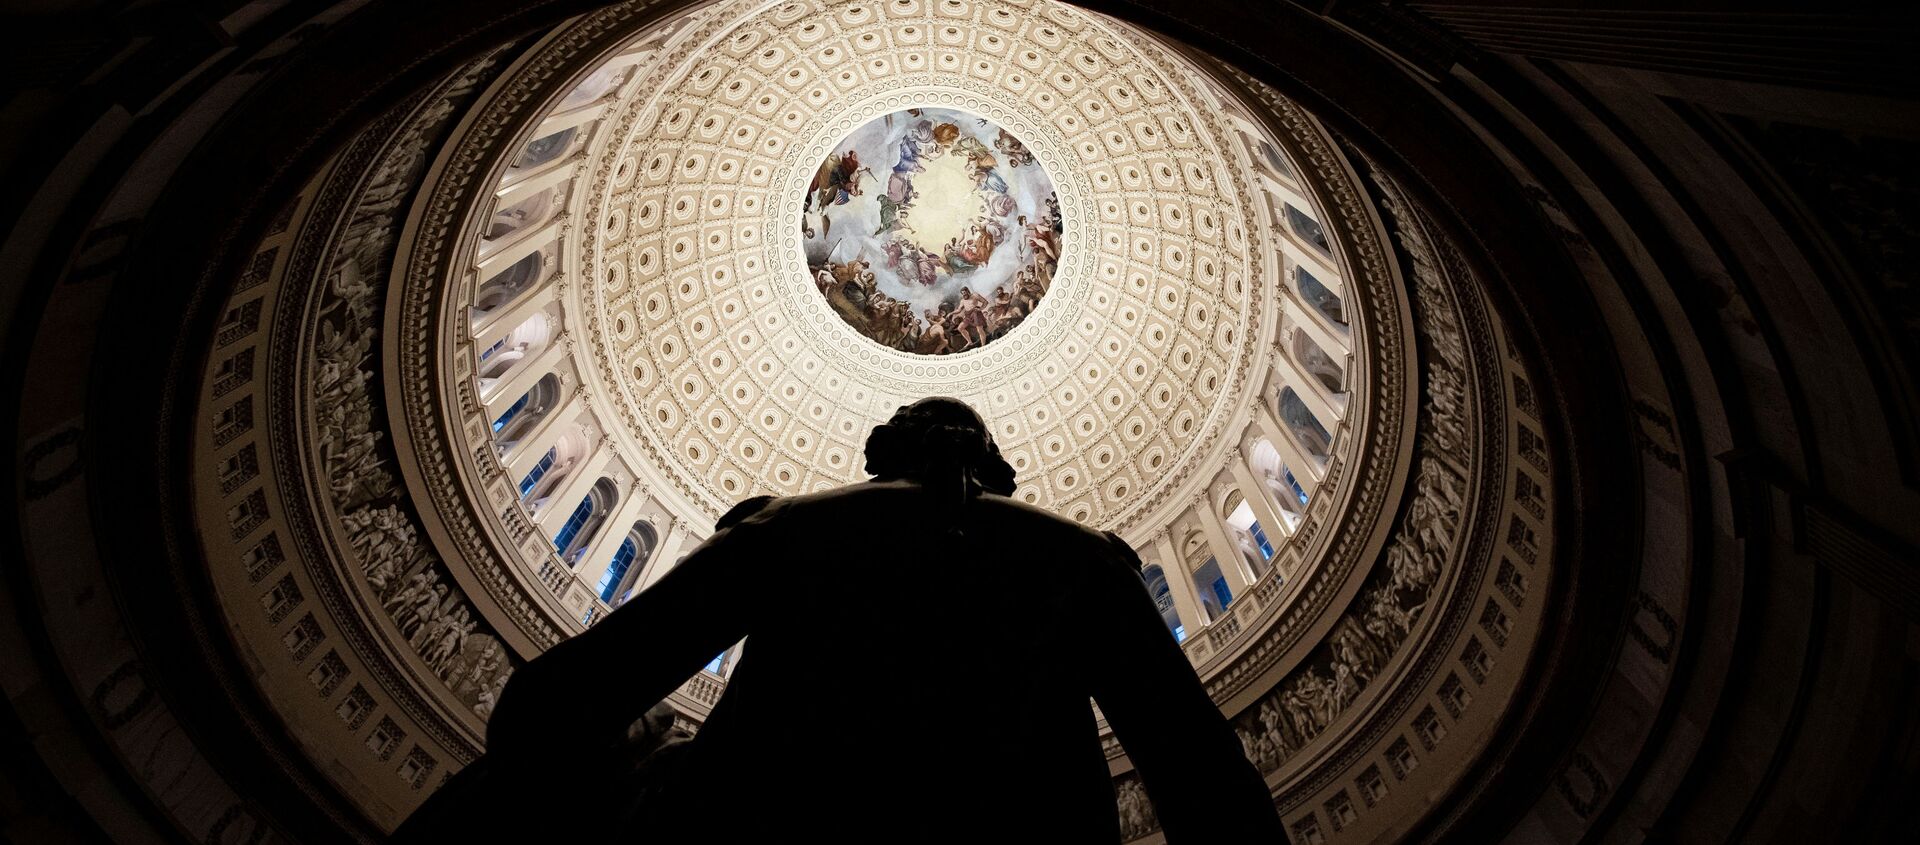 The Rotunda of the U.S. Capitol, viewed from behind a statue of former U.S. President George Washington, in Washington, U.S., January 25, 2021 - Sputnik International, 1920, 01.02.2021